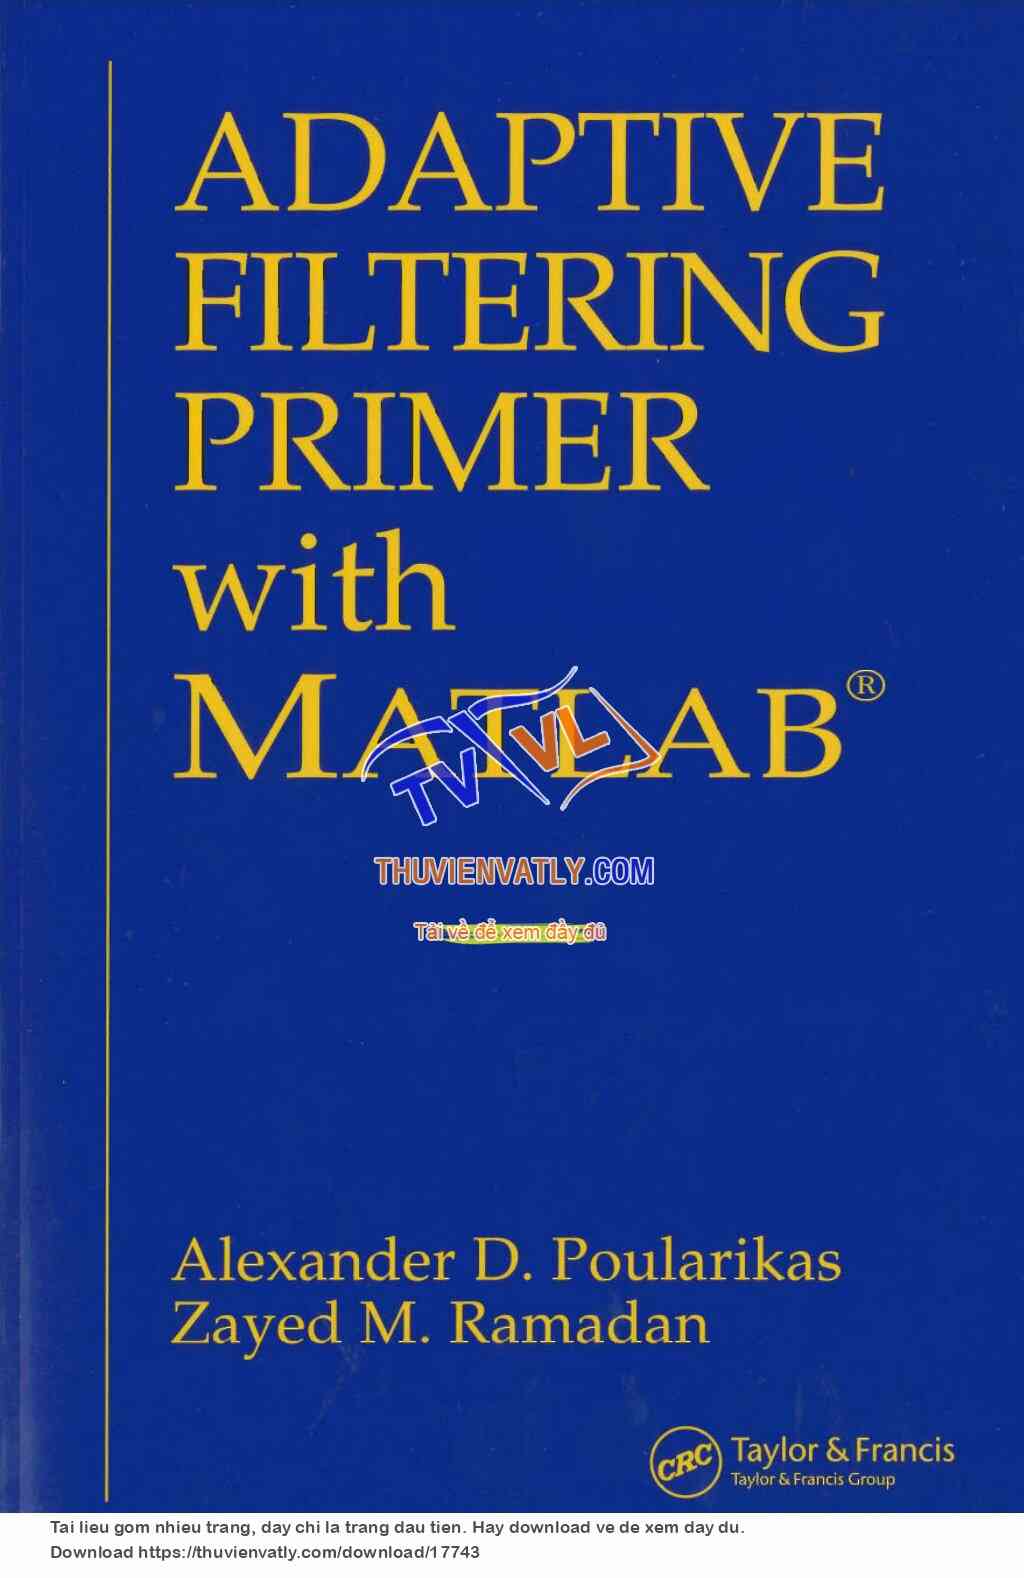 Adaptive Filtering Primer with MATLAB - Poularikas and Ramadan